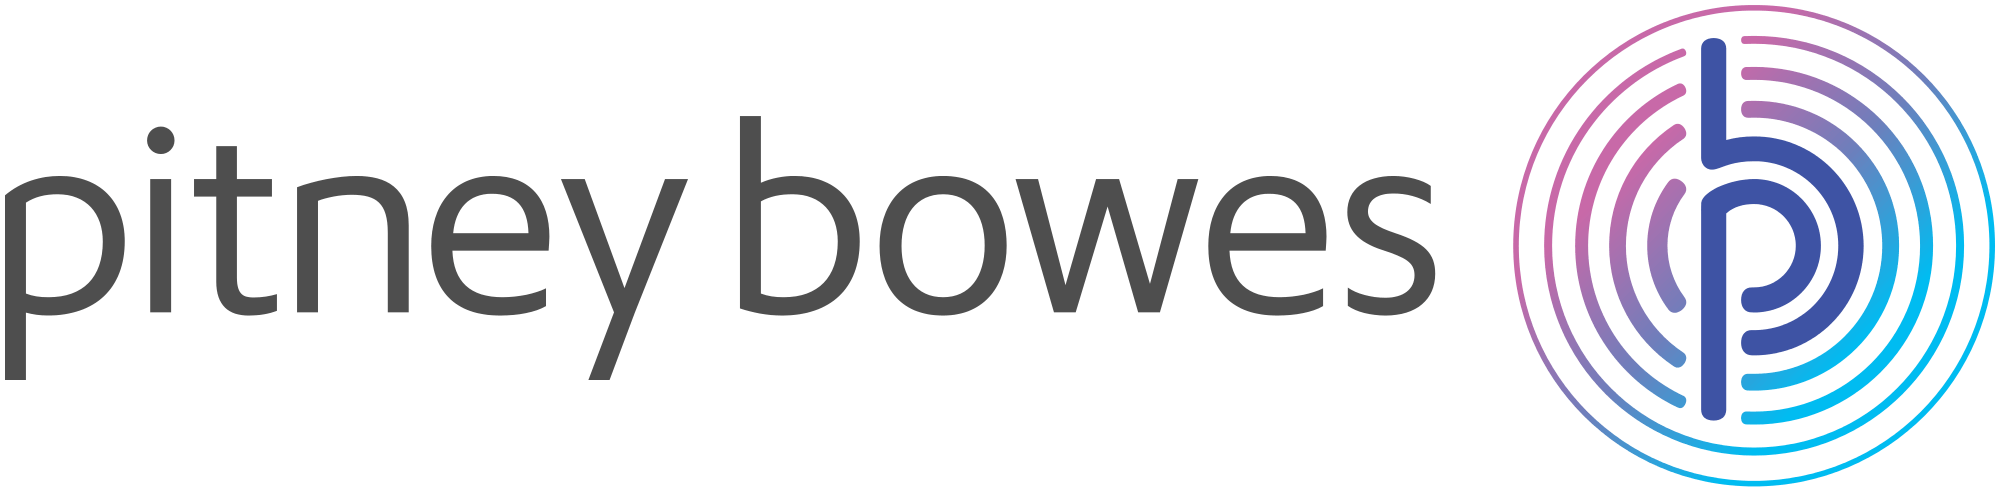 ServiceMax Logo - Pitney Bowes Customer Story